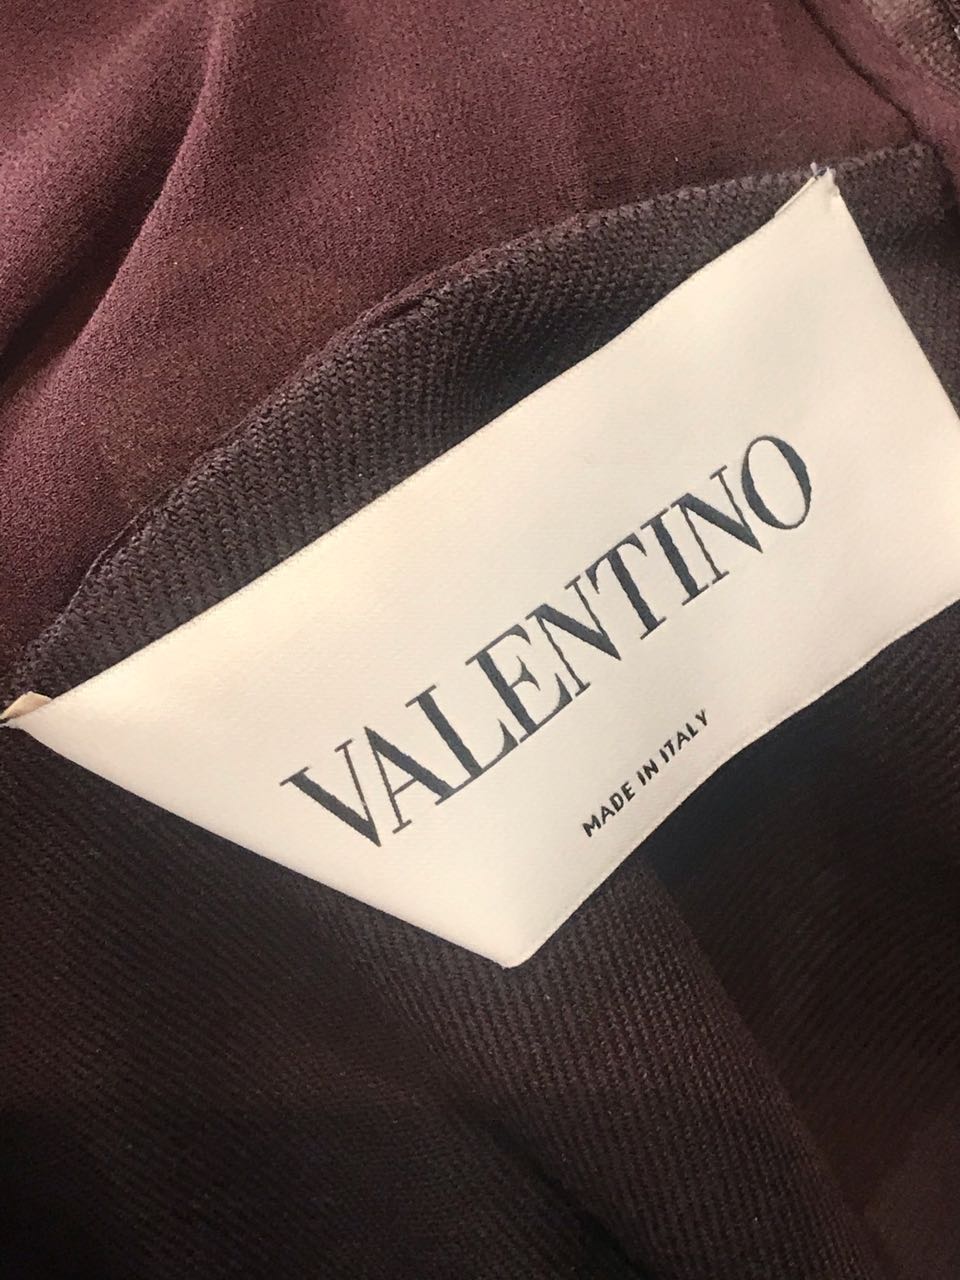 Robe Valentino bordeaux T.38